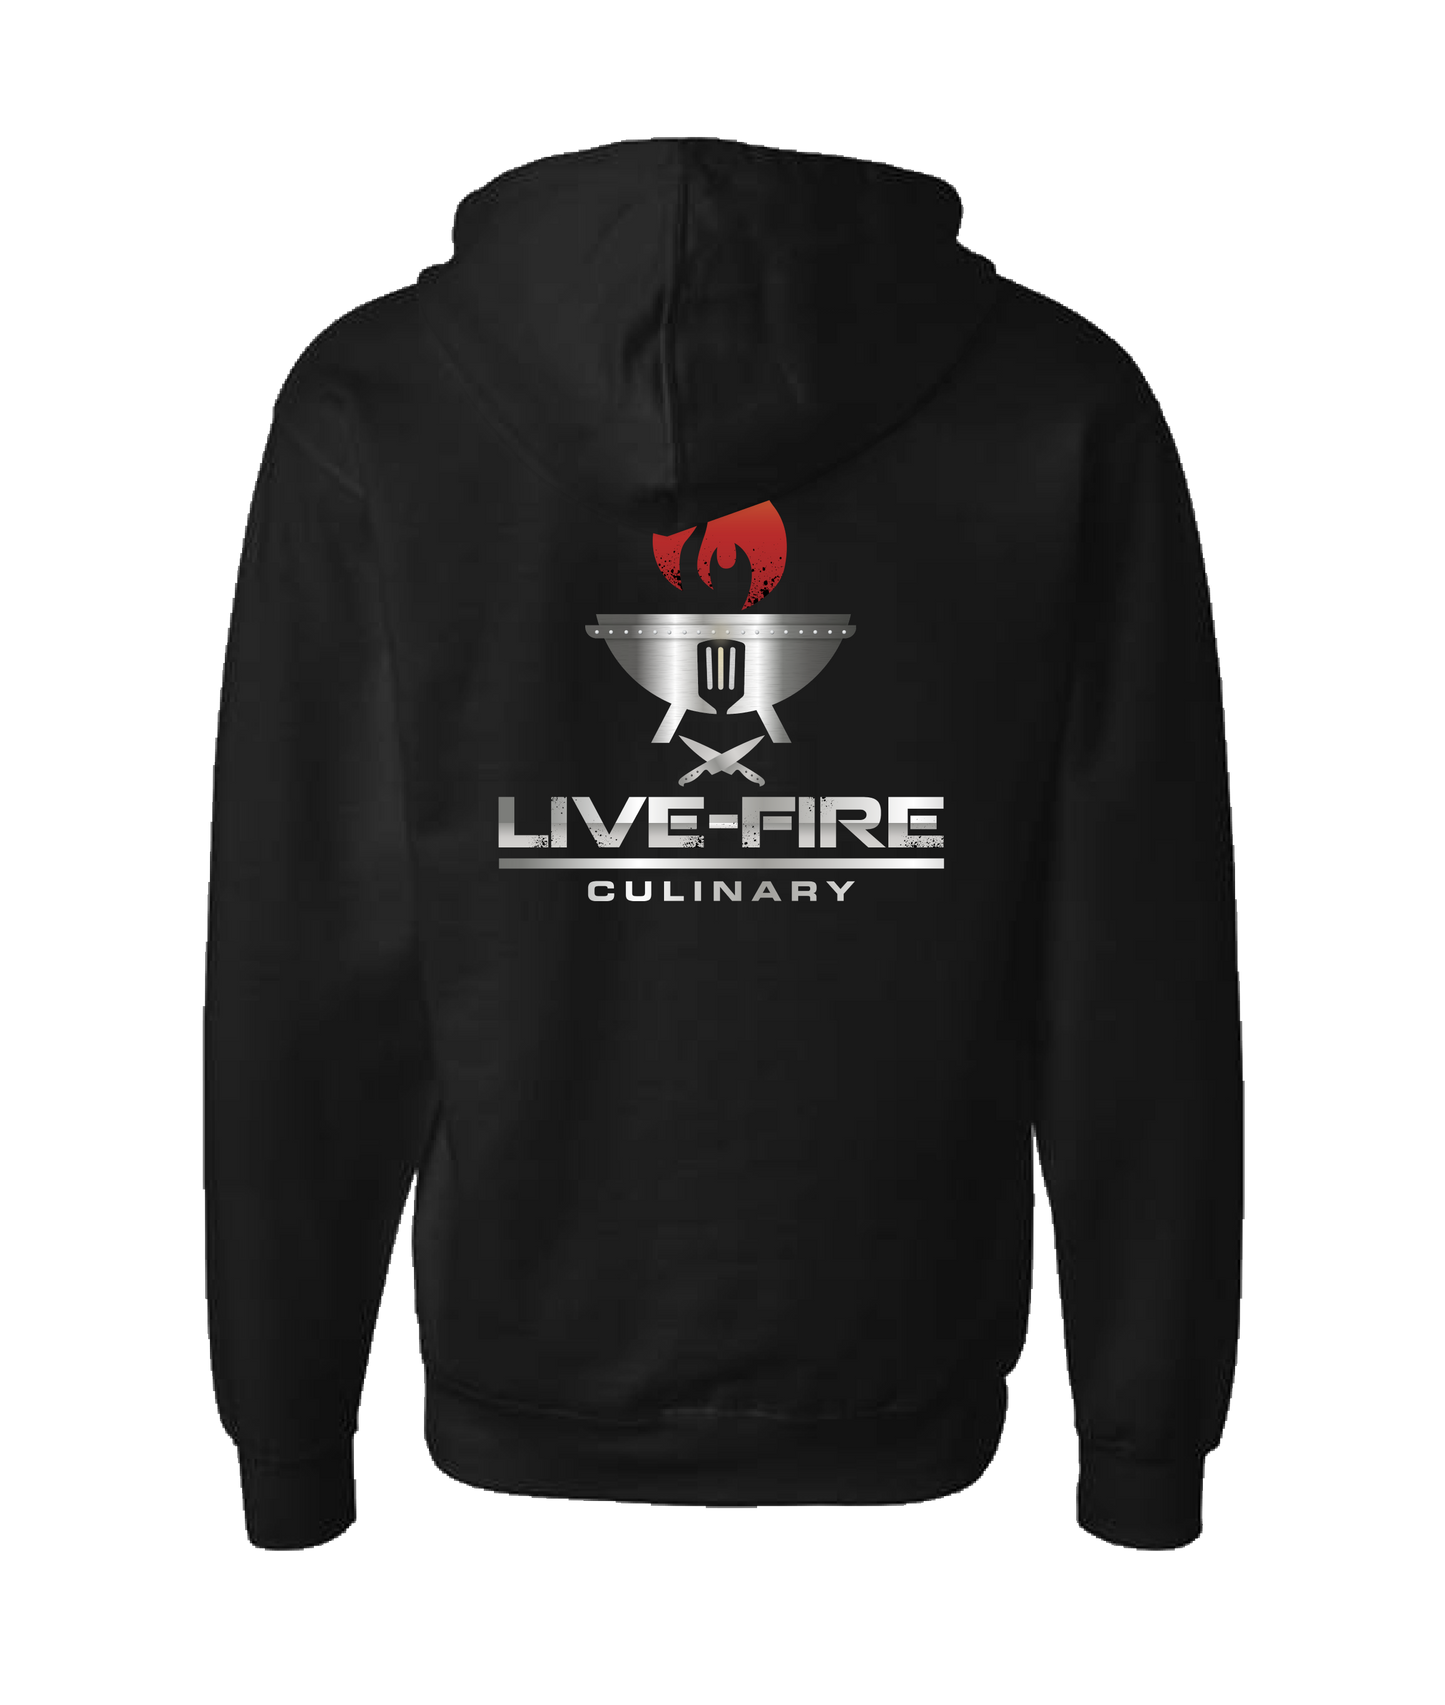 Live-Fire Culinary - Fire - Black Zip Up Hoodie